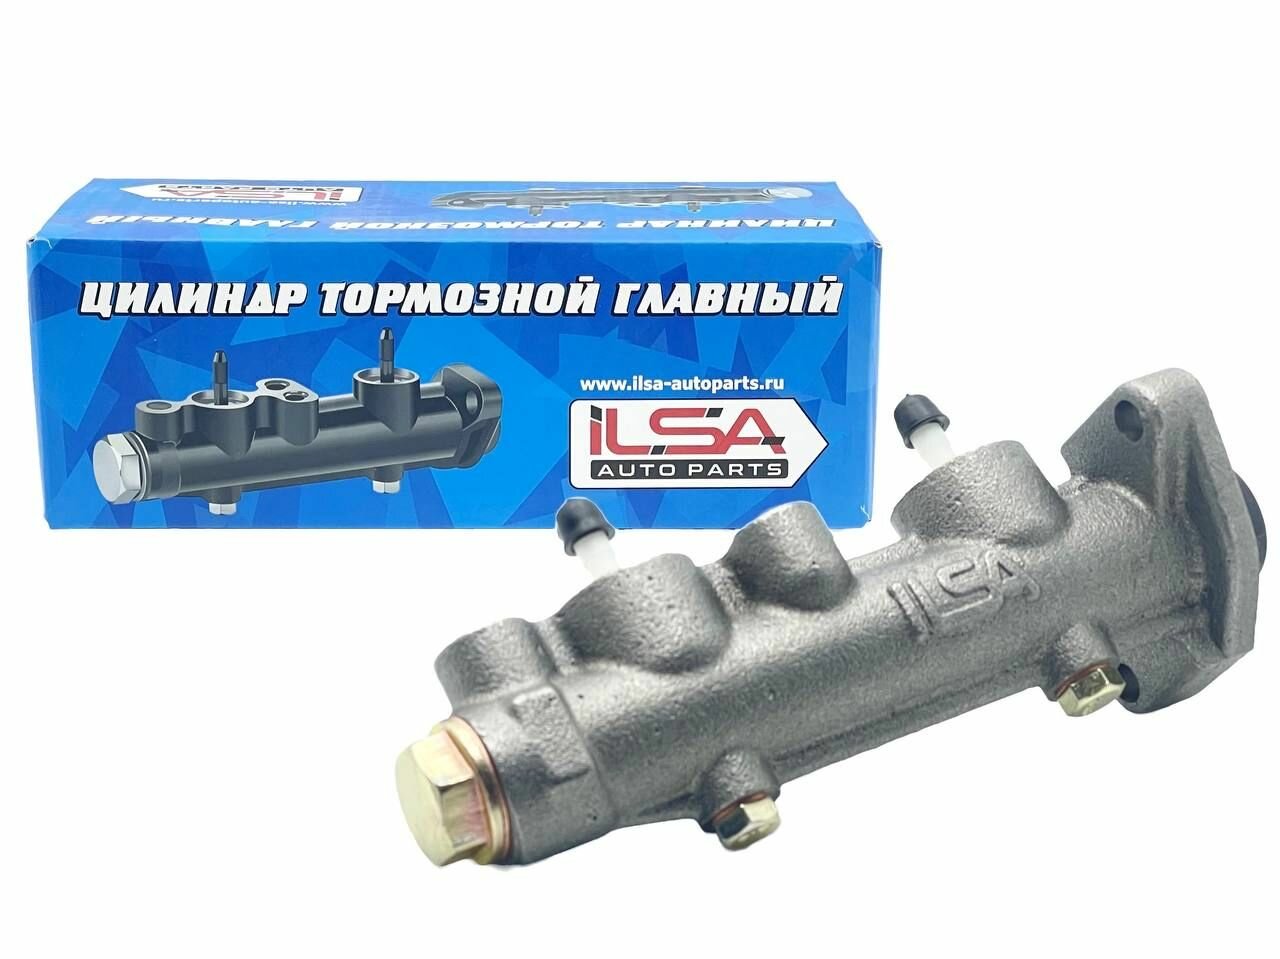 Главный тормозной цилиндр / ГТЦ "ILSA" ВАЗ LADA 2101-07 / LS0423 / 2101-3505008